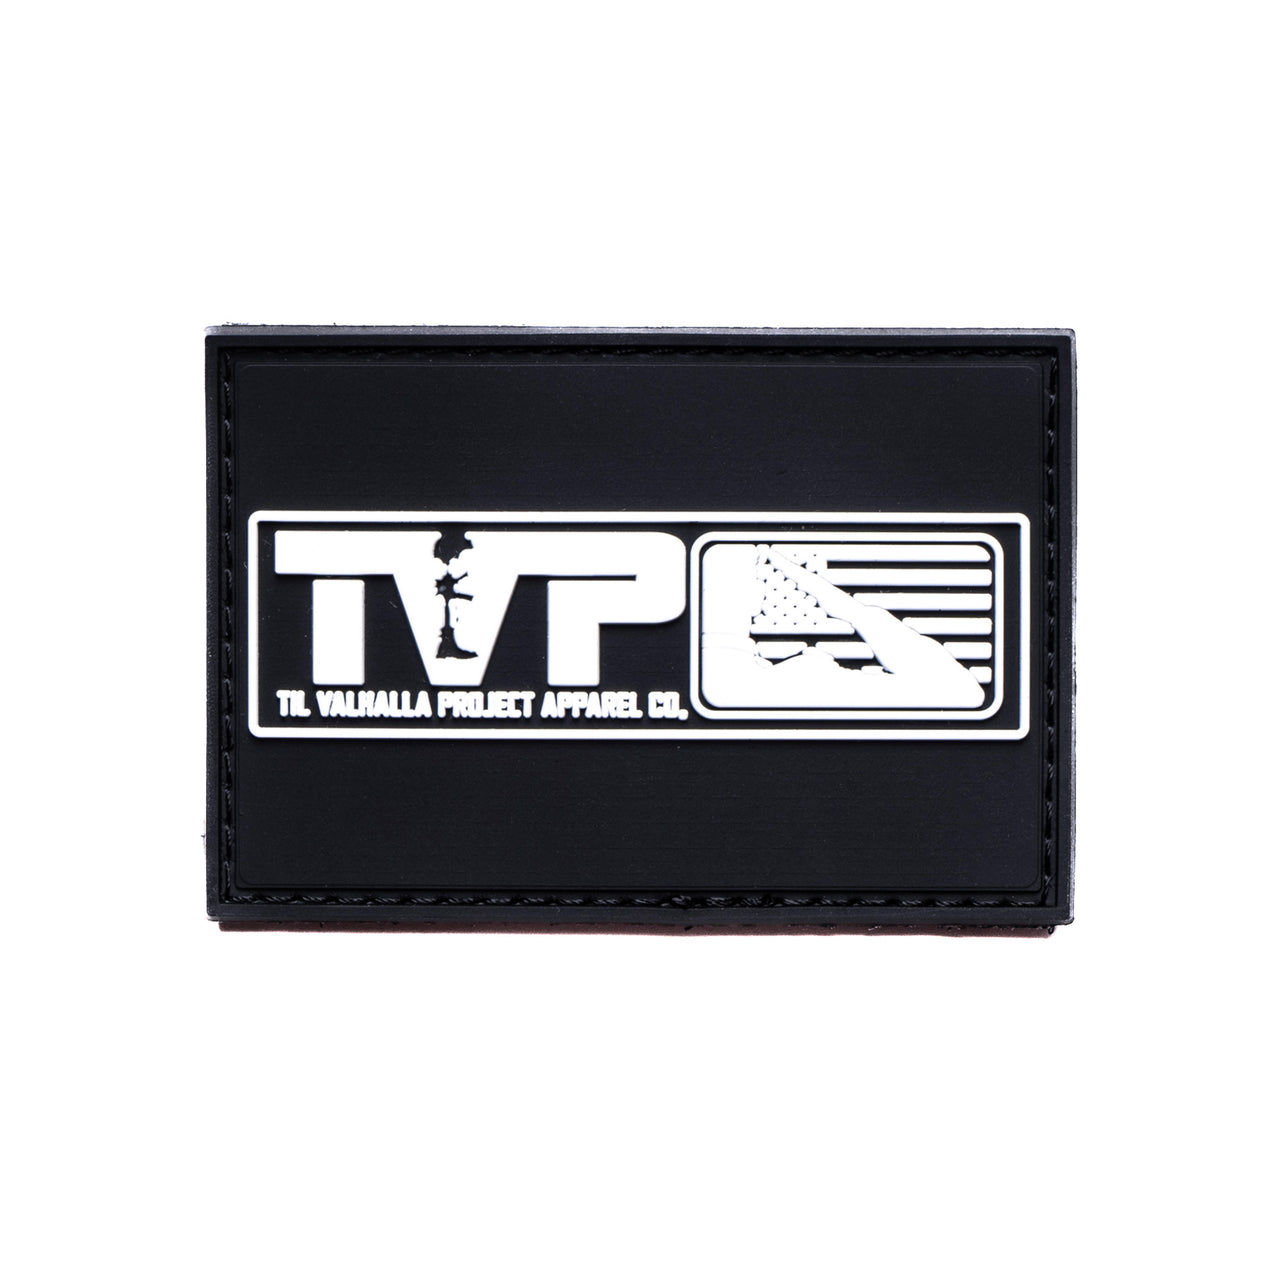 TVP Velcro Patch